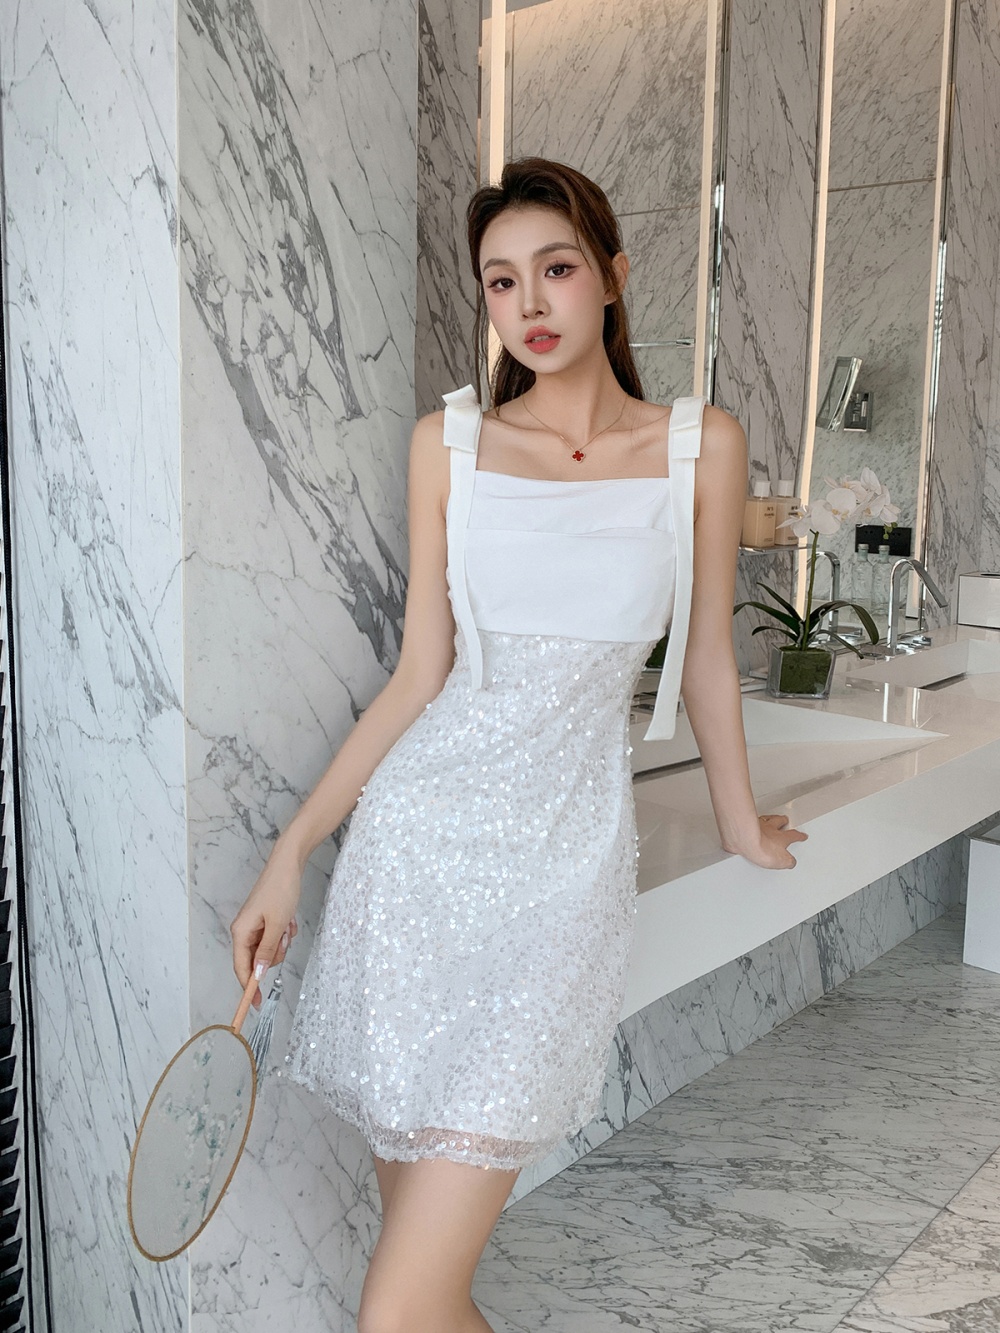 Slim white banquet formal dress wrapped chest elegant collar dress